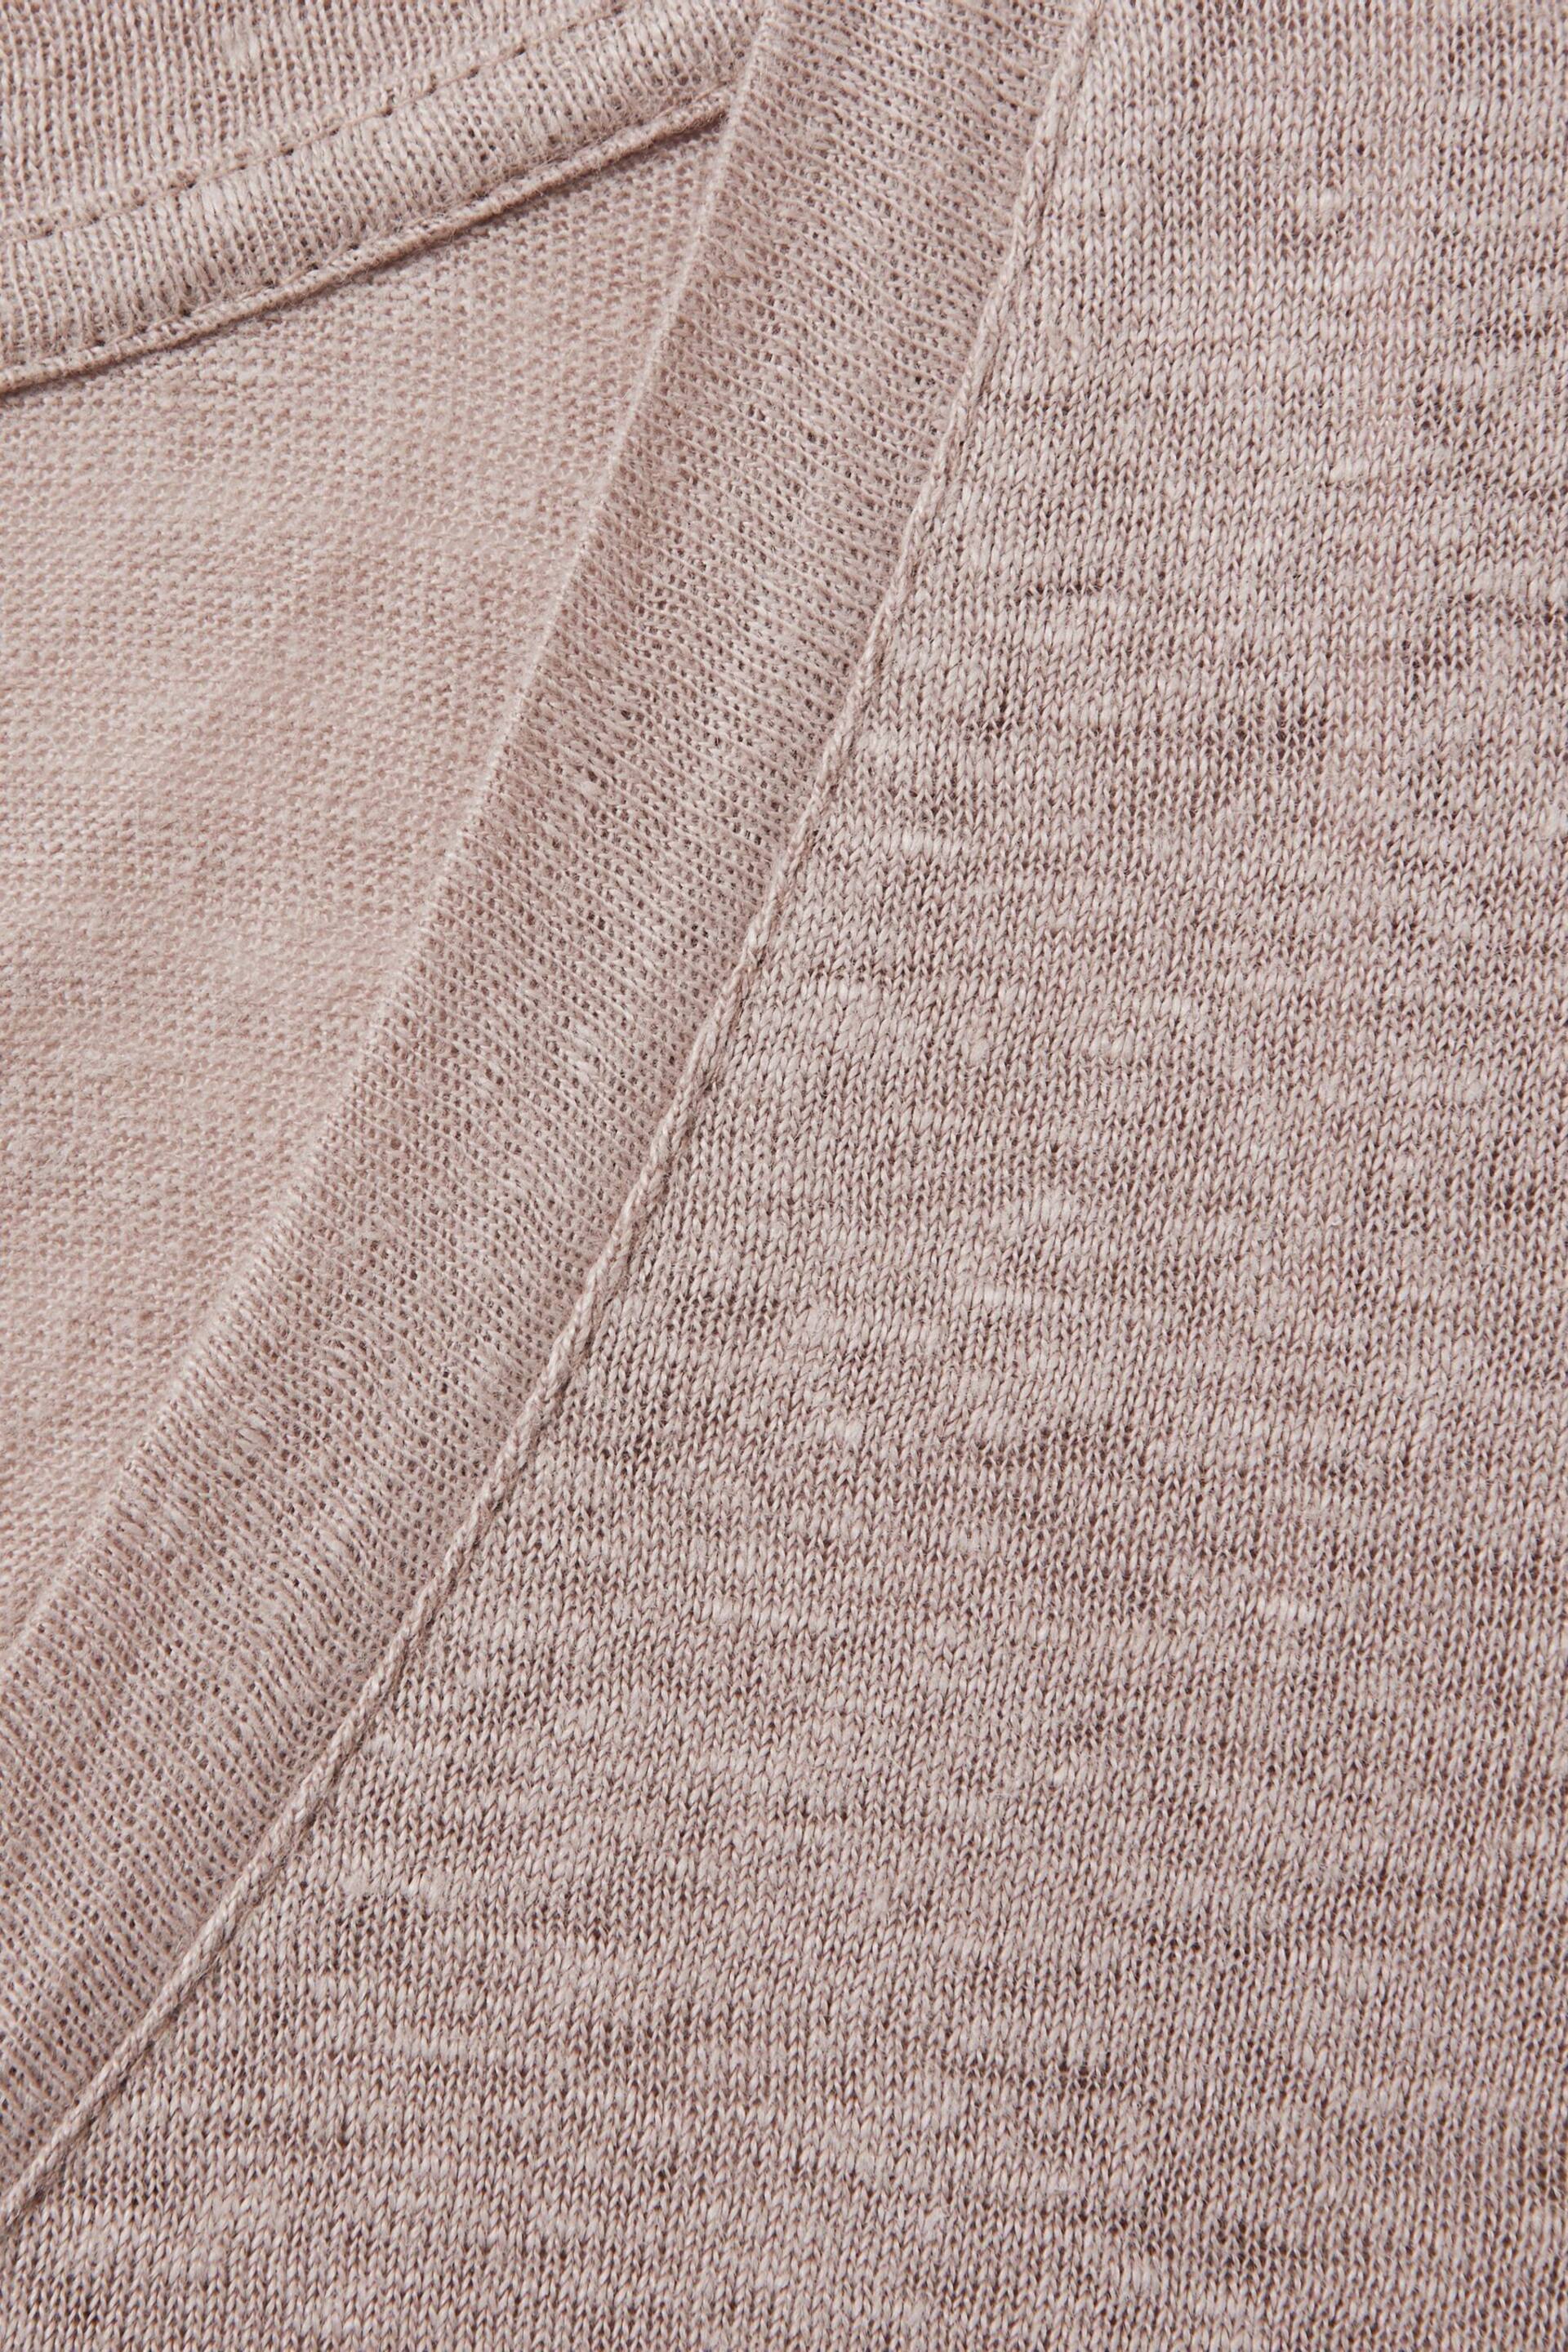 Reiss Mink Lottie Marled Linen V-Neck T-Shirt - Image 6 of 6